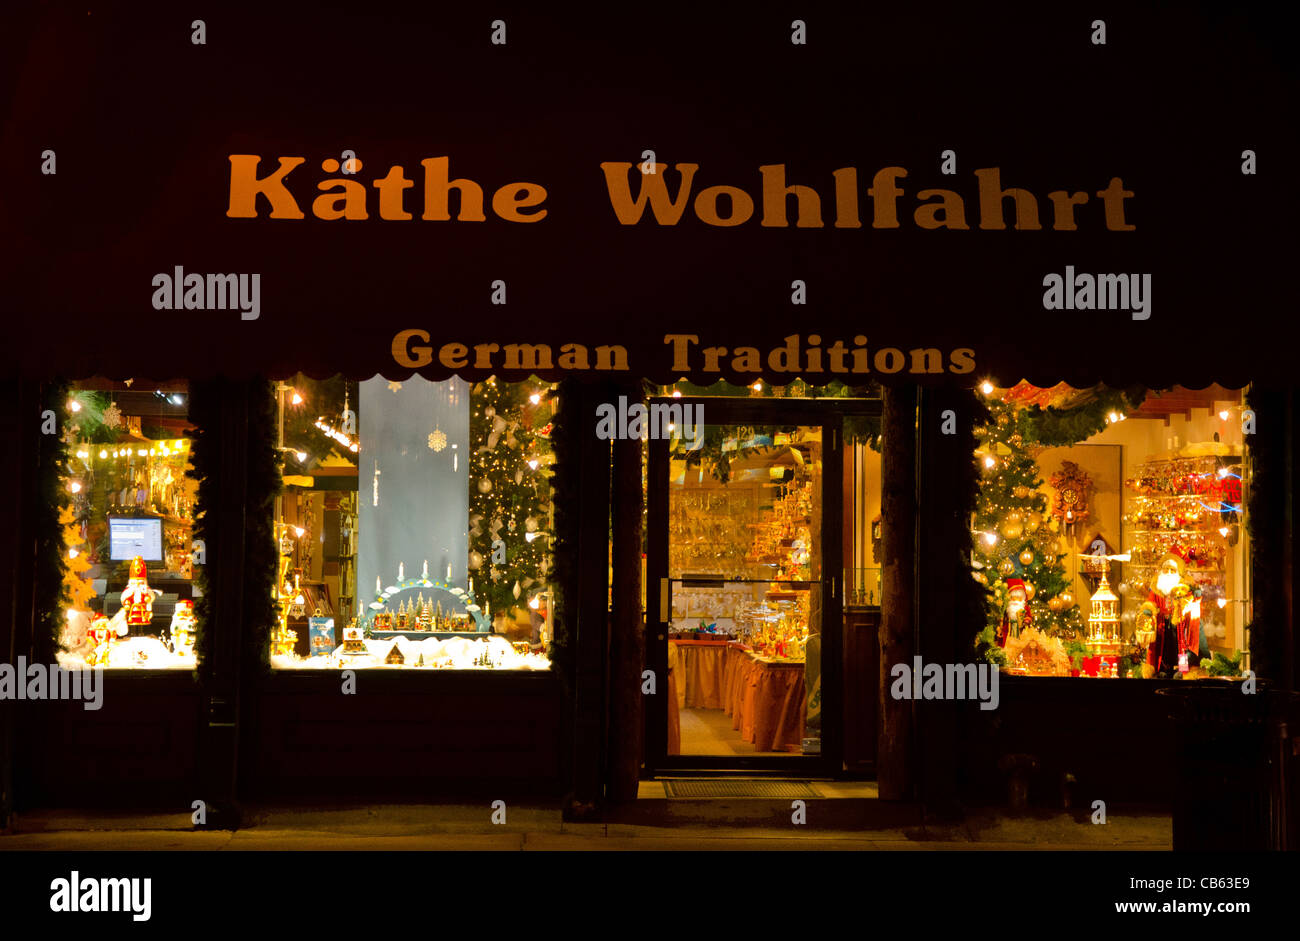 Kathe Wohlfahrt German traditions shop Stillwater, Minnesota at night Stock Photo